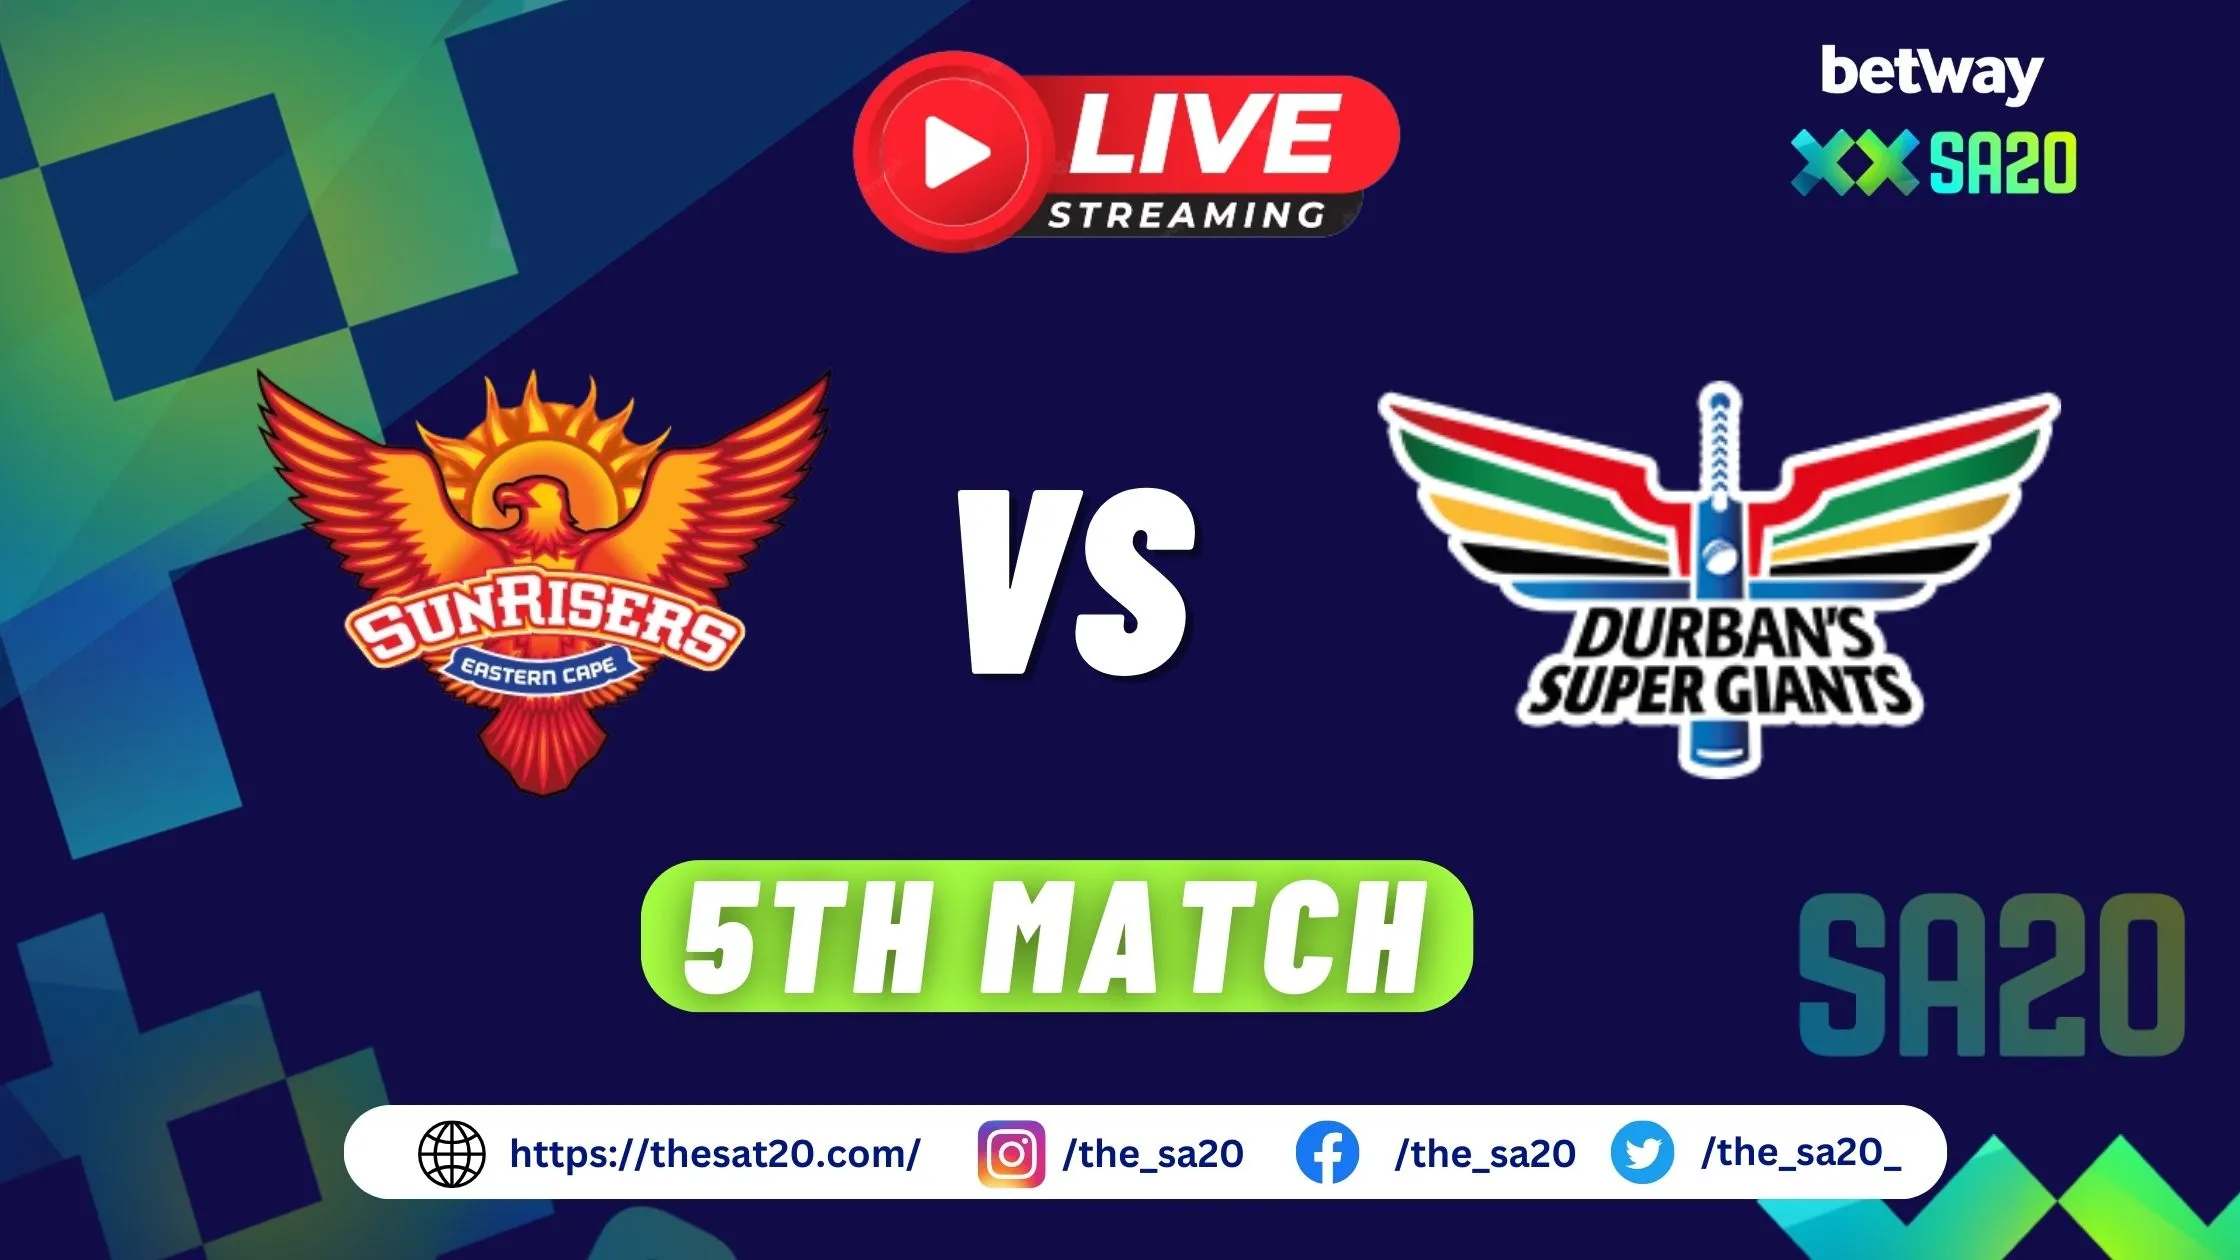 Sunrisers-Eastern-Cape-vs-Durban_s-Super-Giants-Live-5th-Match-of-SA20-_1_